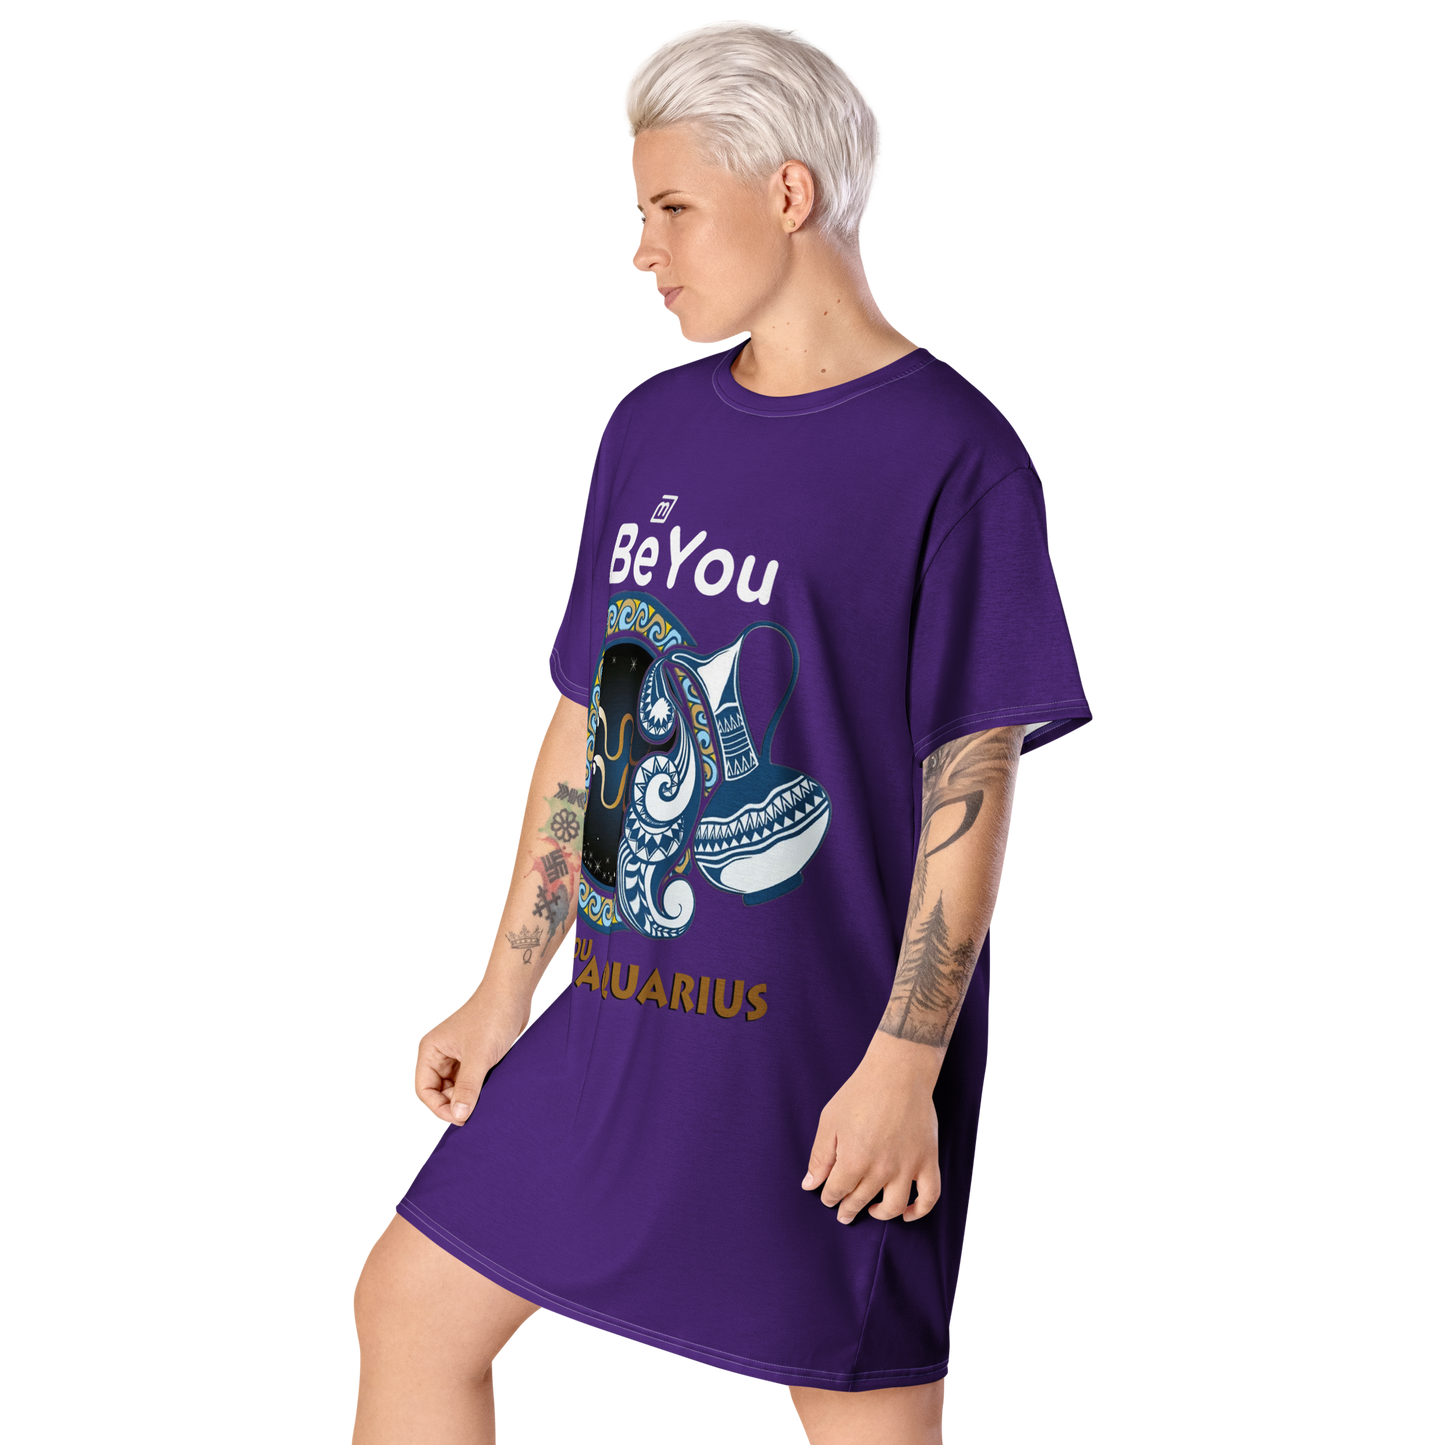 Aquarius T-Shirt Dress